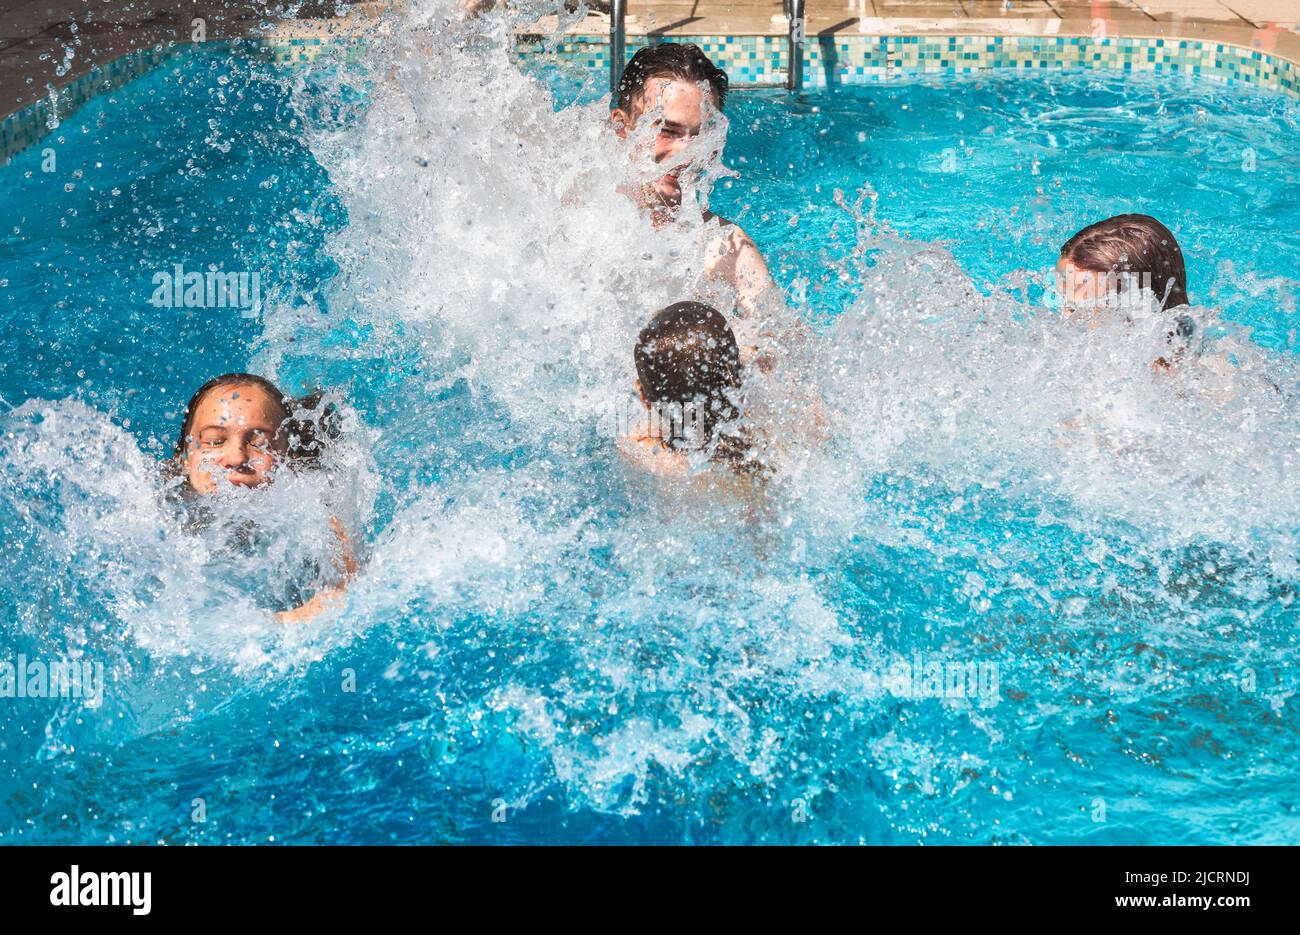 Four happy children having fun in a hotel pool splashing water enjoying summer holidays Stock Photo